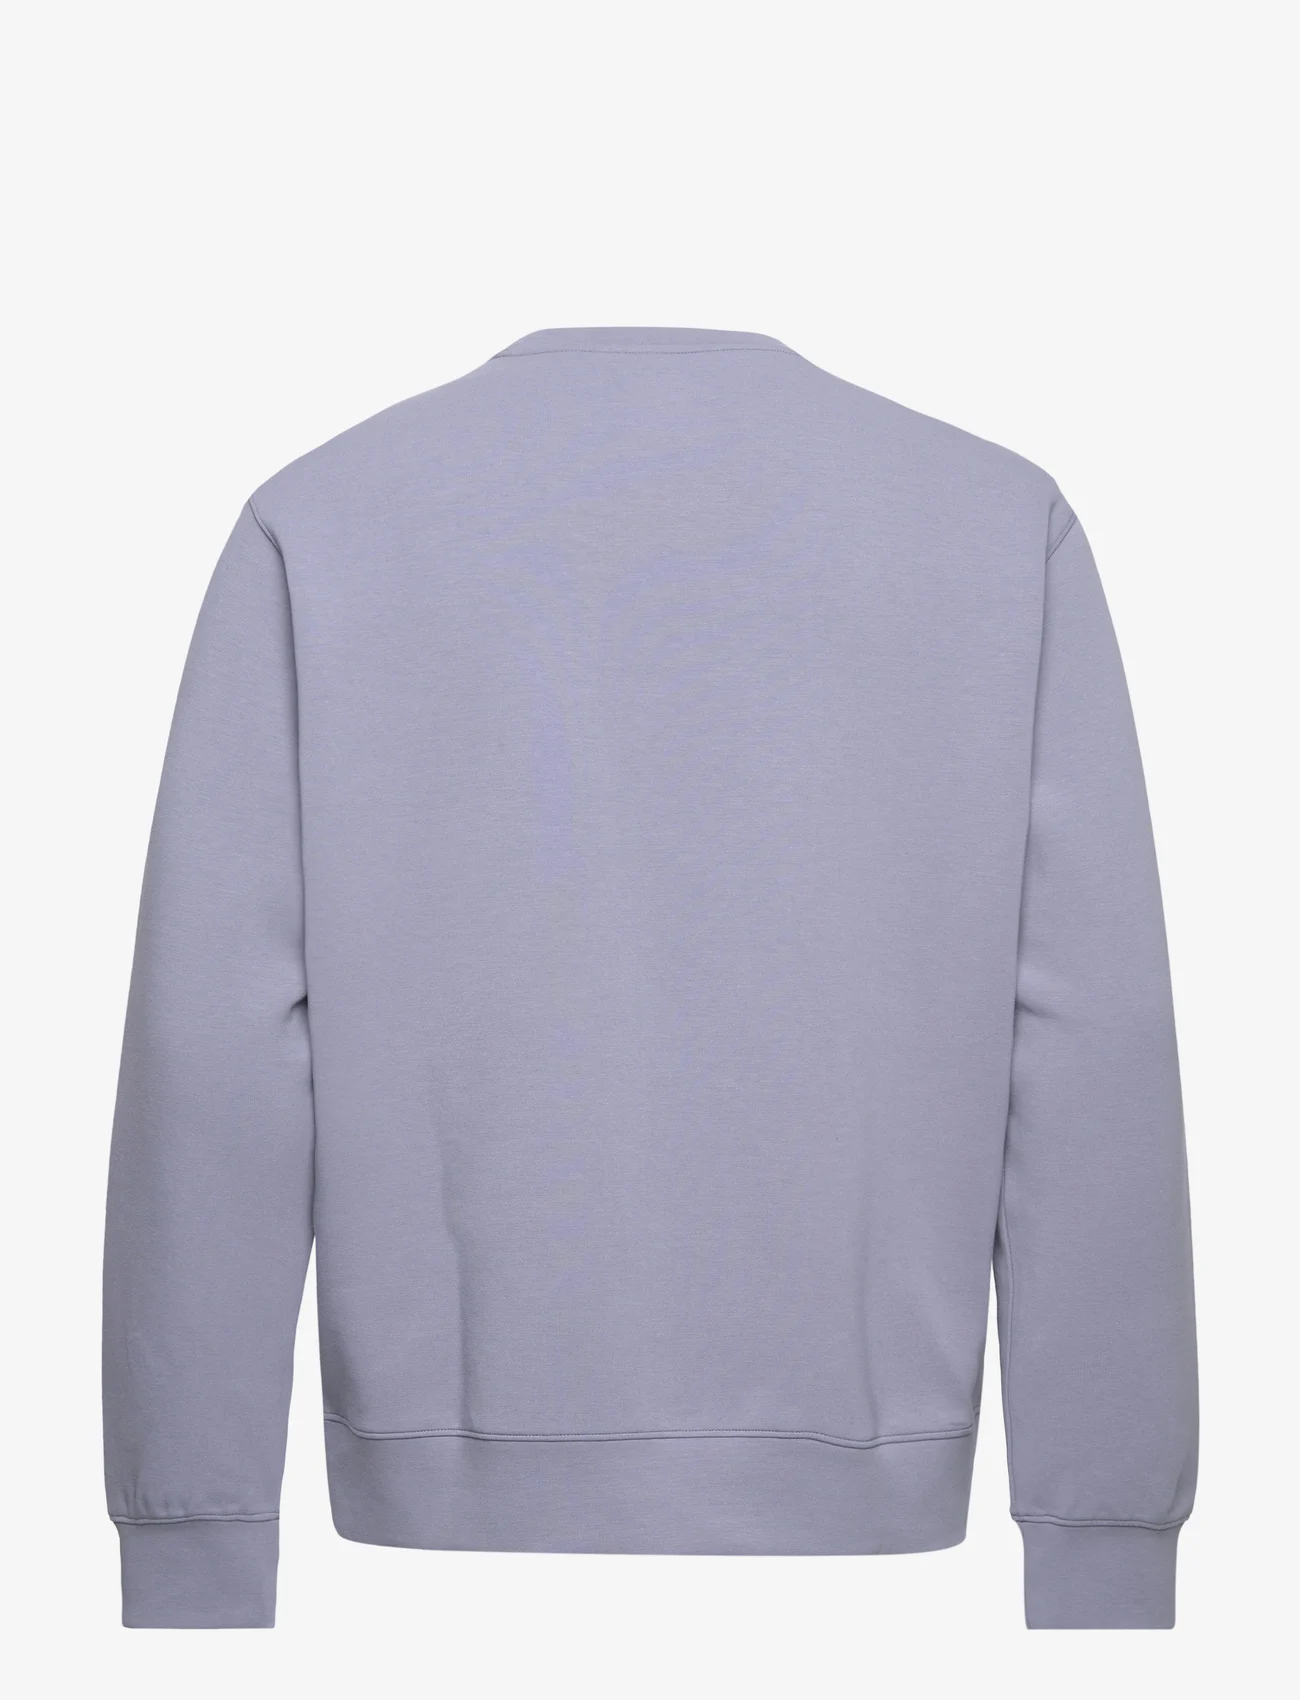 Mango - Breathable recycled fabric sweatshirt - sweatshirts - lt-pastel blue - 1